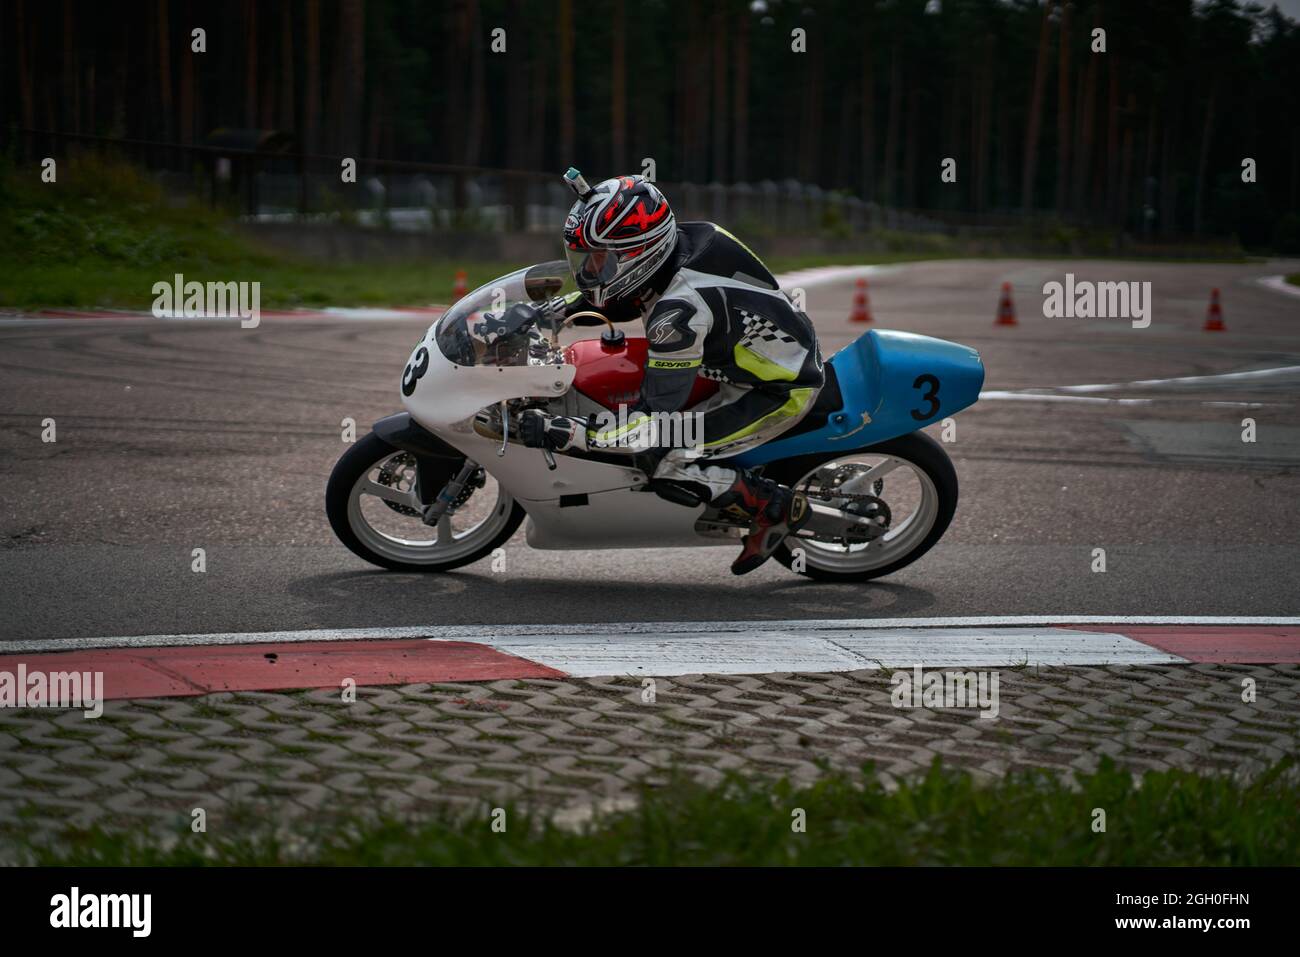 10-05-2021 Lithuania, Kaunas MotoGP rider, Motorcyclist rides at fast sport bike. Stock Photo